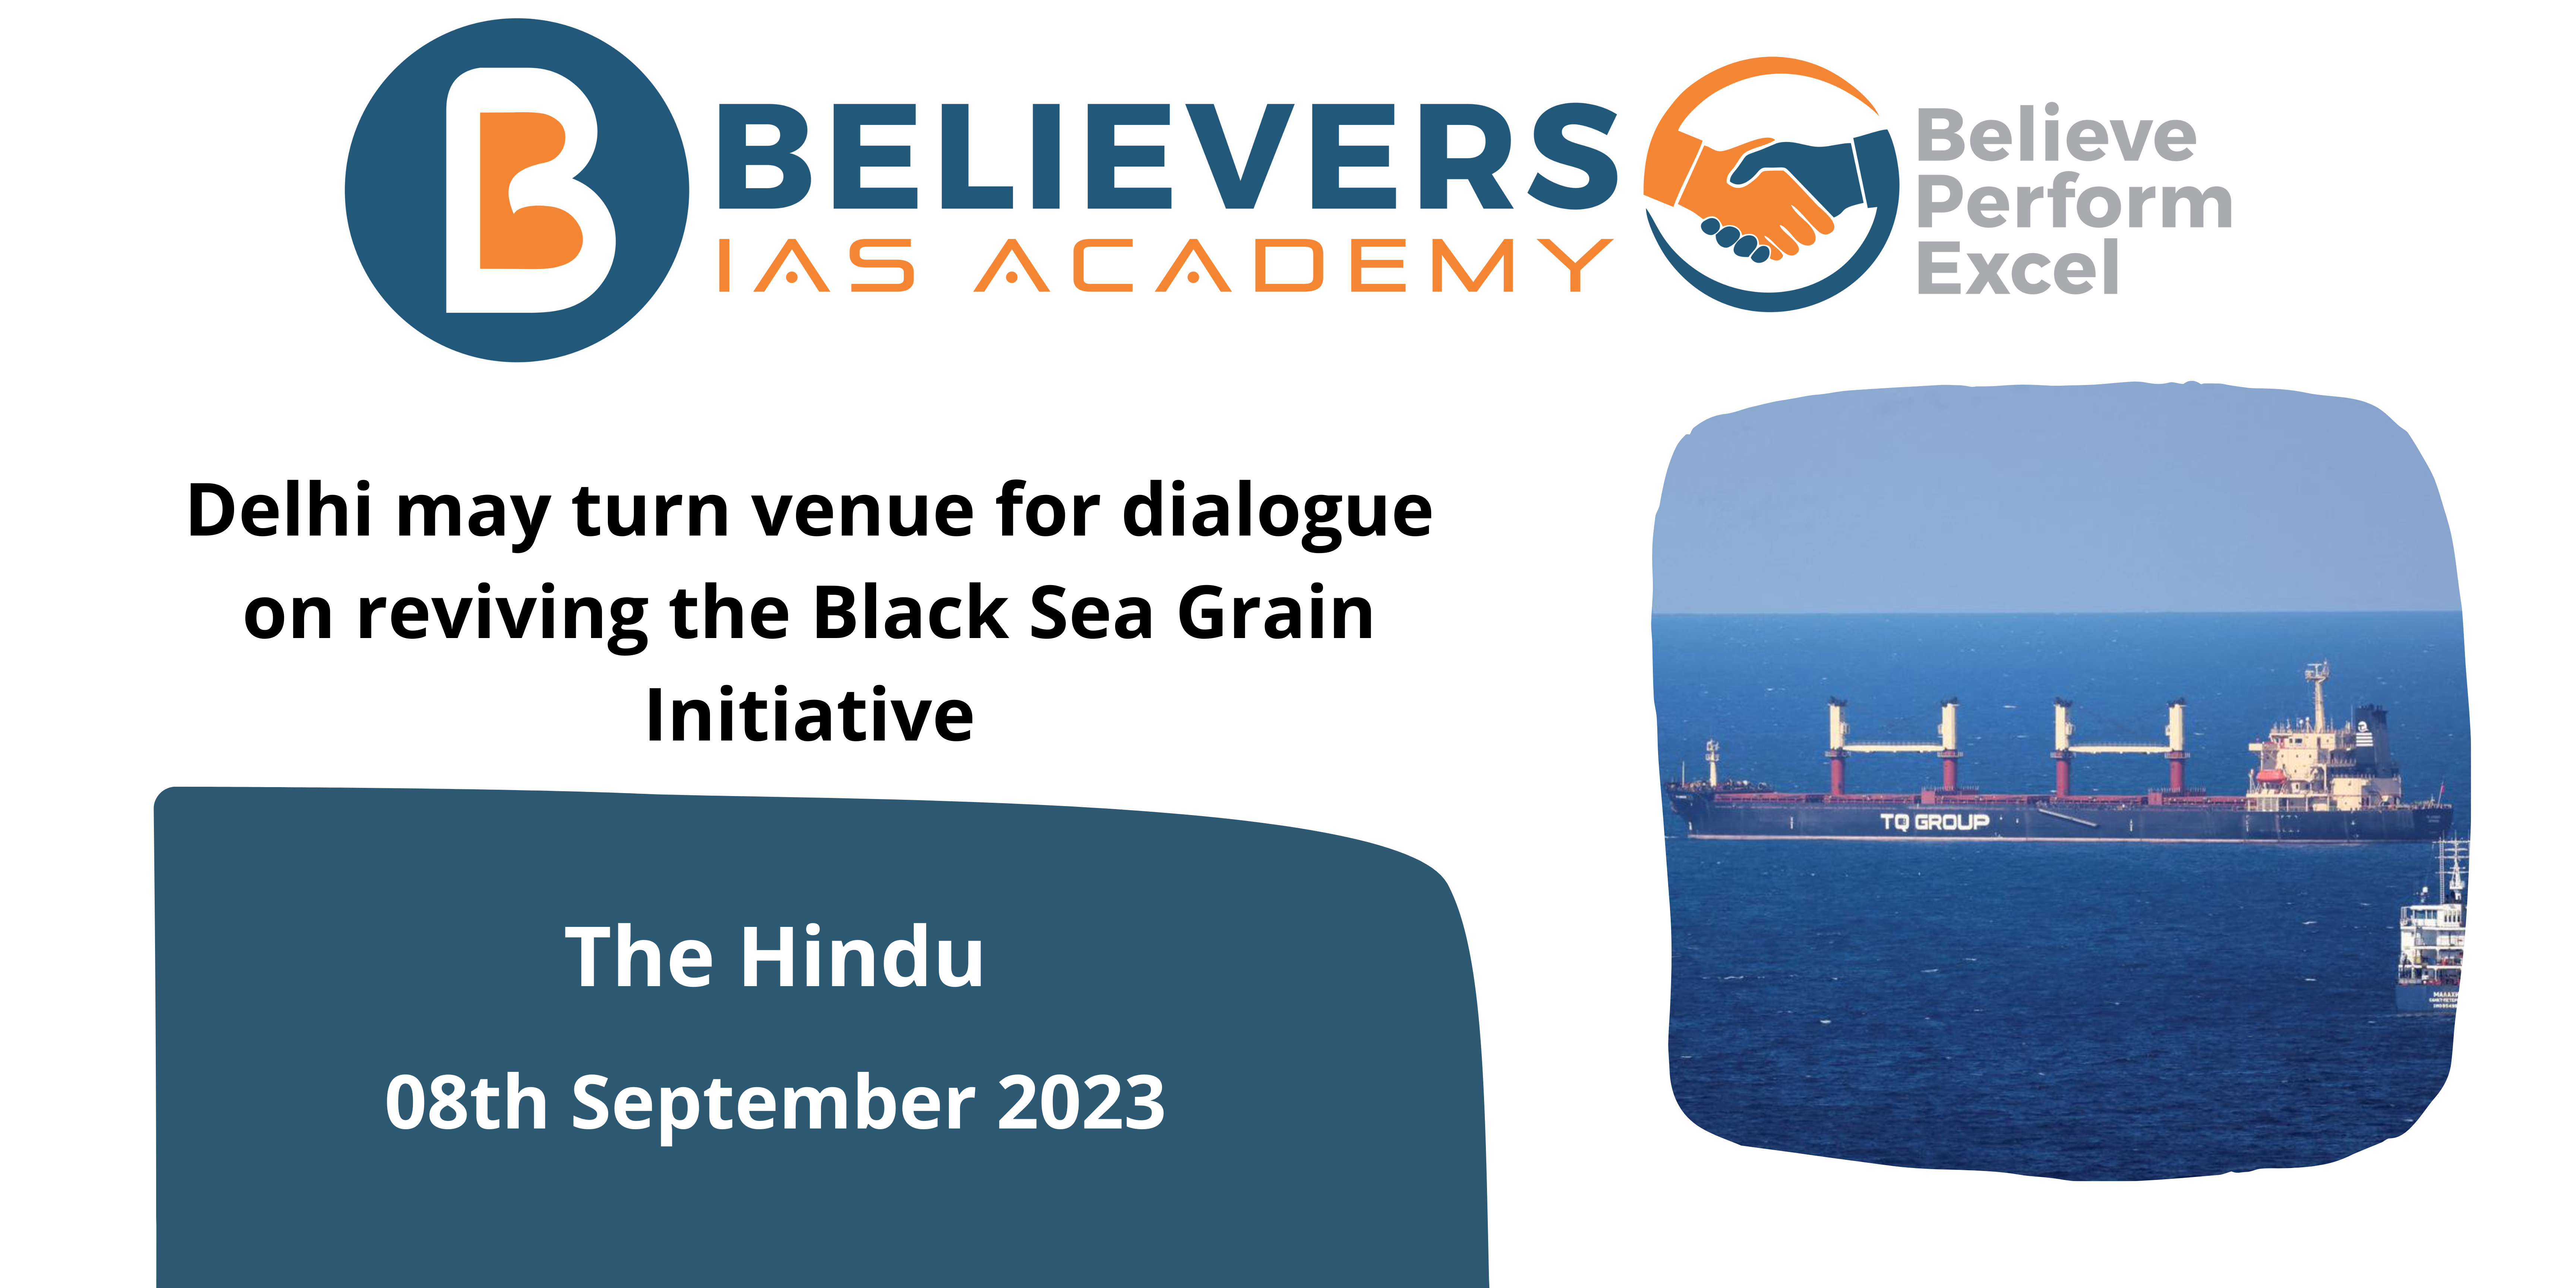 Delhi may turn venue for dialogue on reviving the Black Sea Grain Initiative